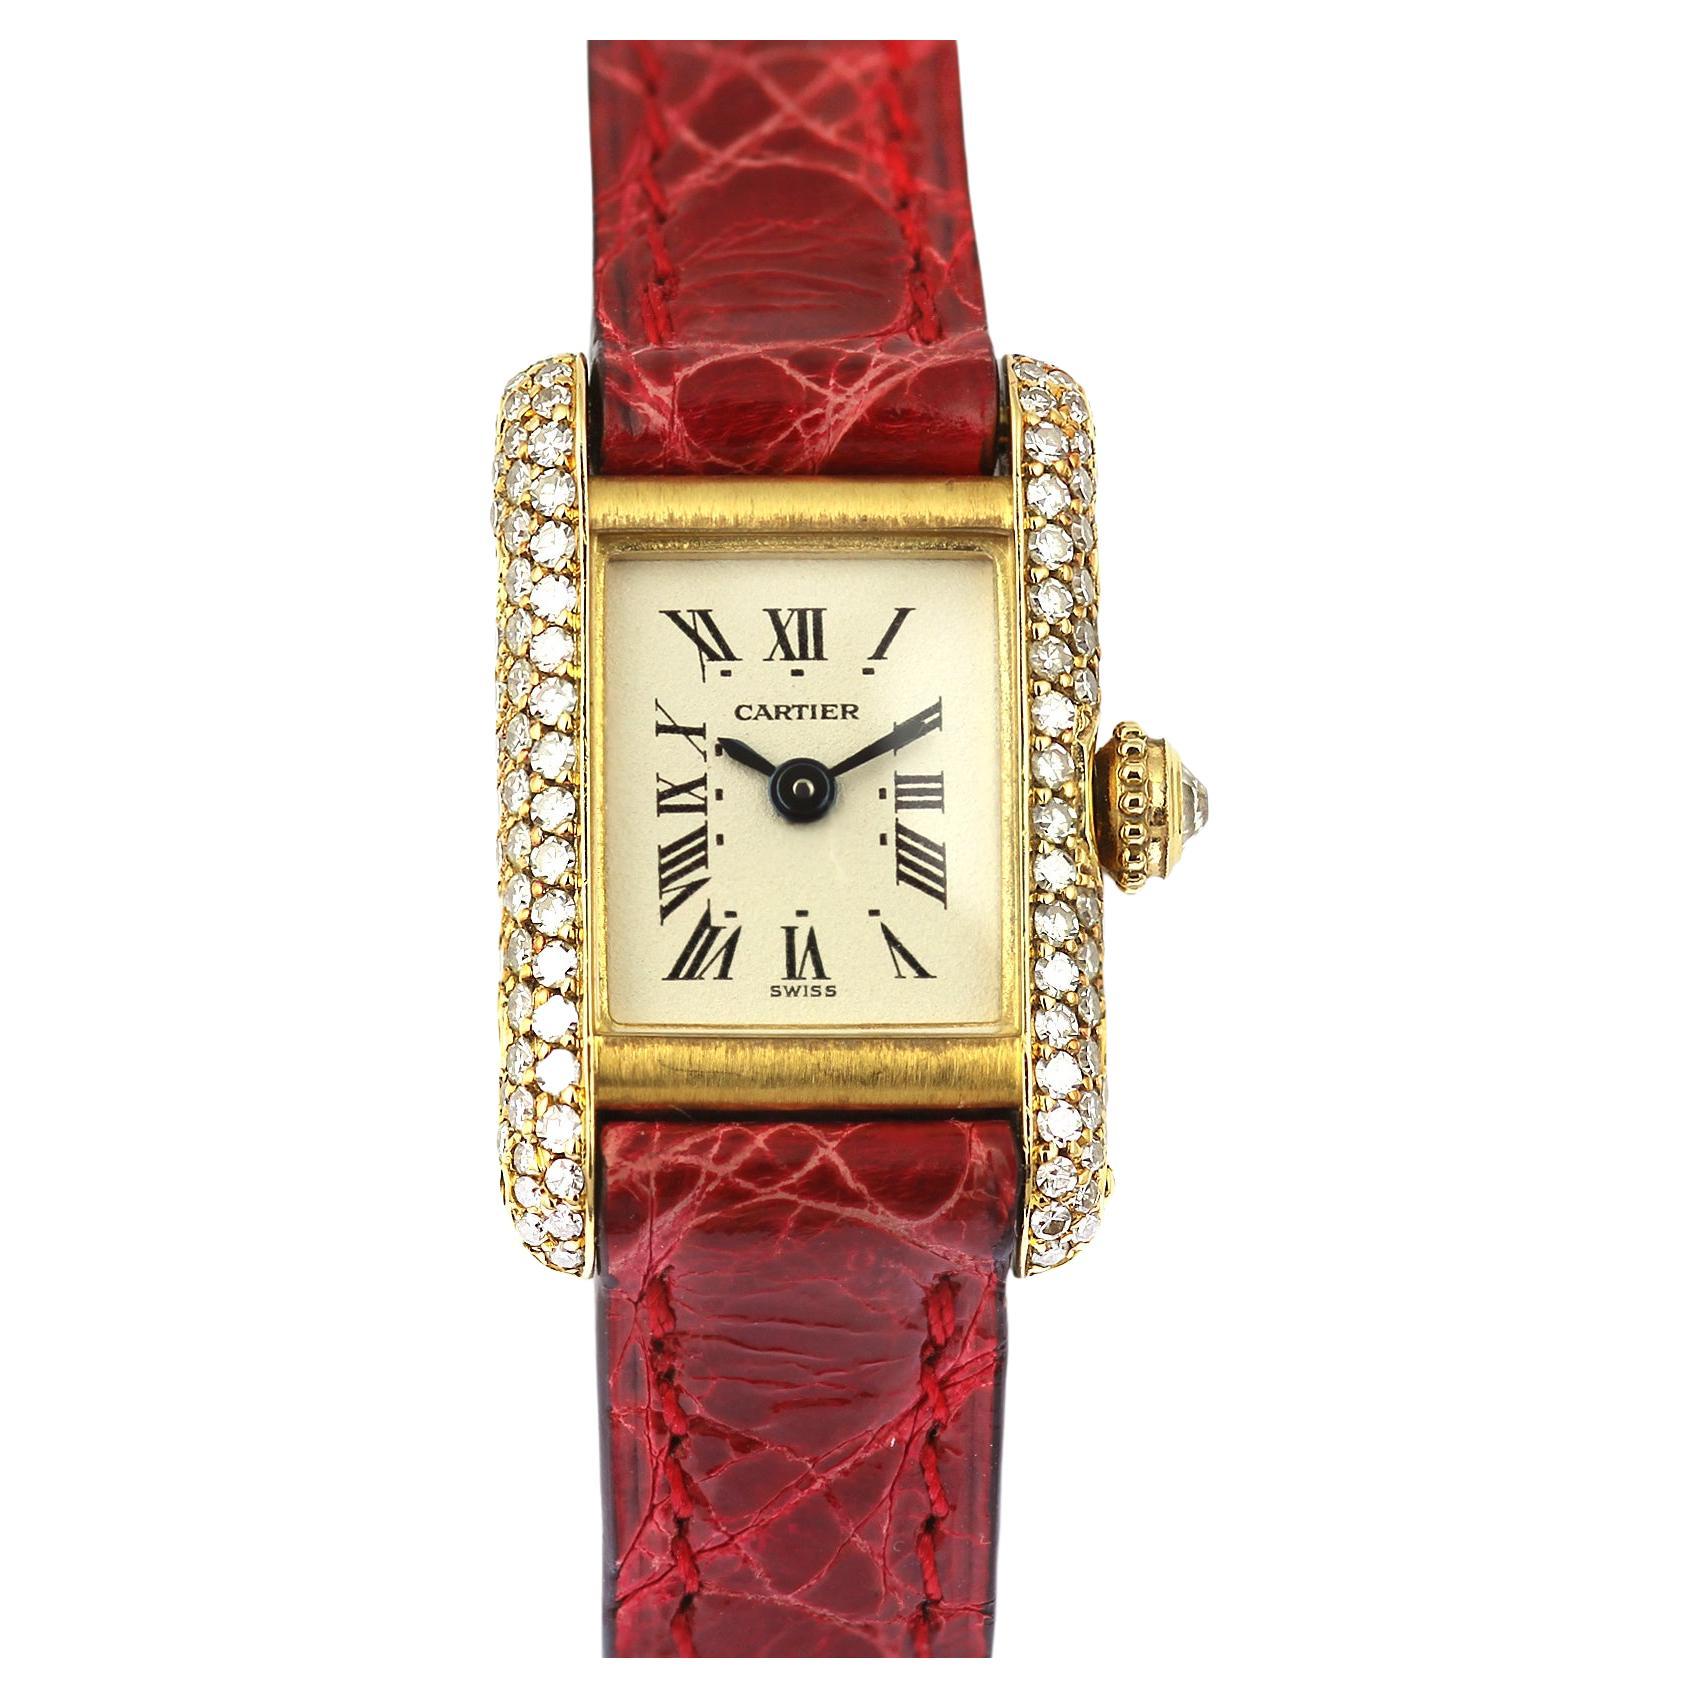 Cartier Ladies Tank Watch in 18K Yellow Gold & Diamonds, Original Box